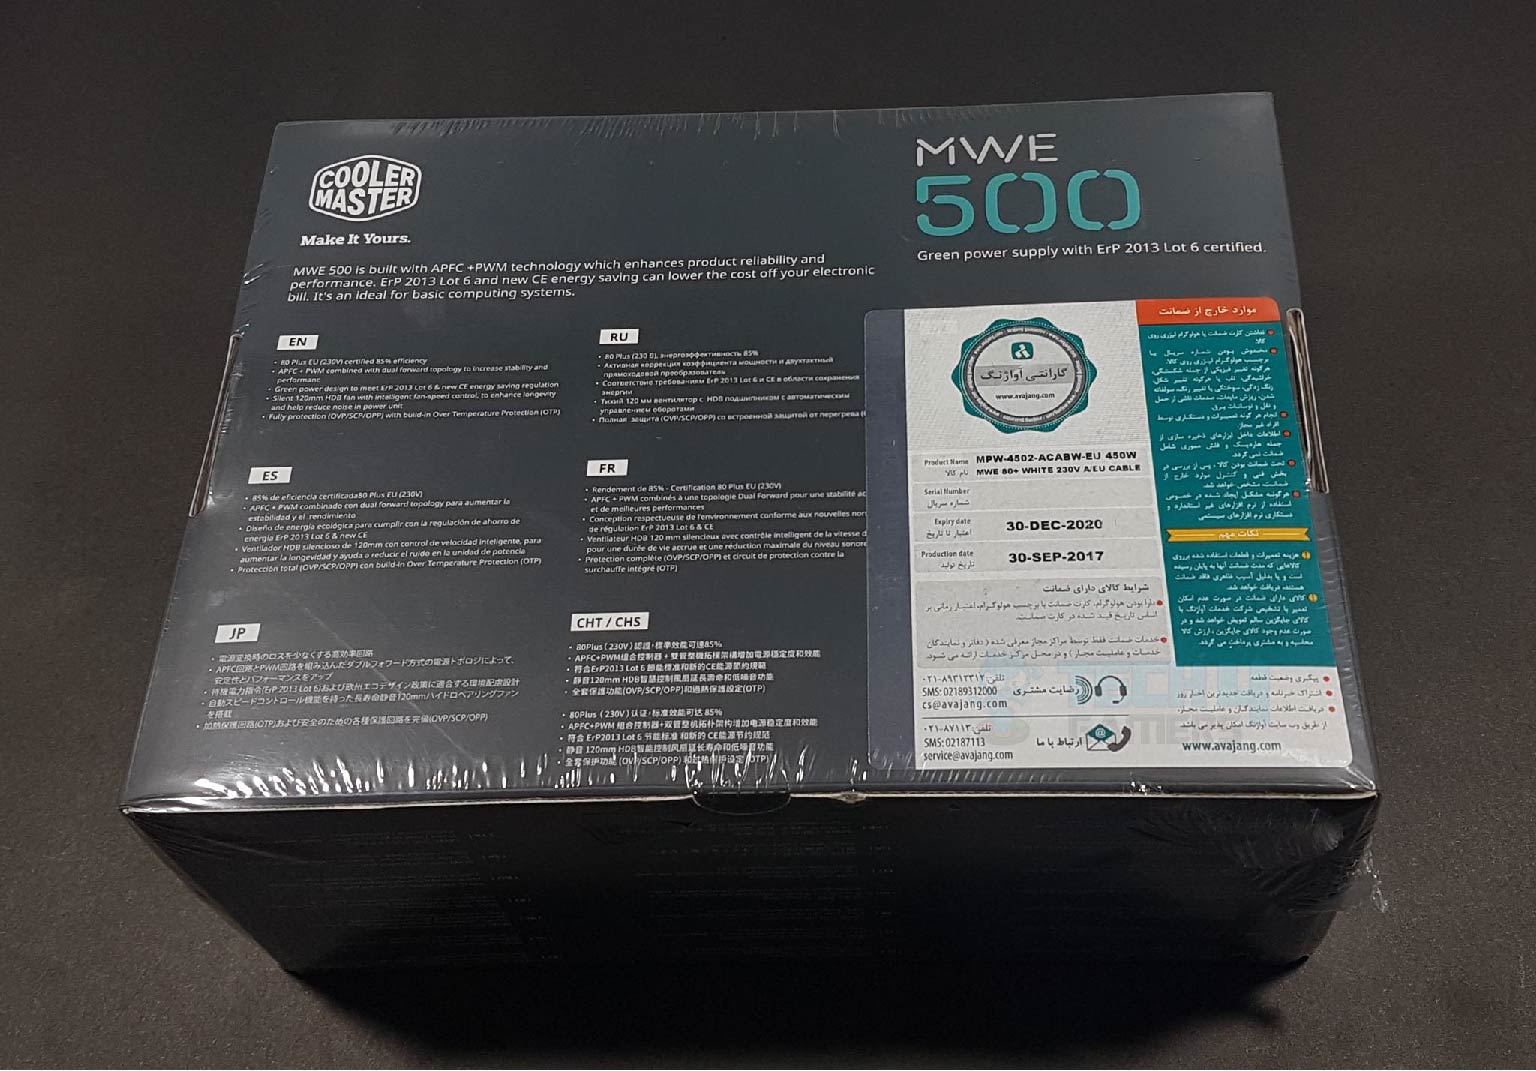 MWE 500 Back Packaging